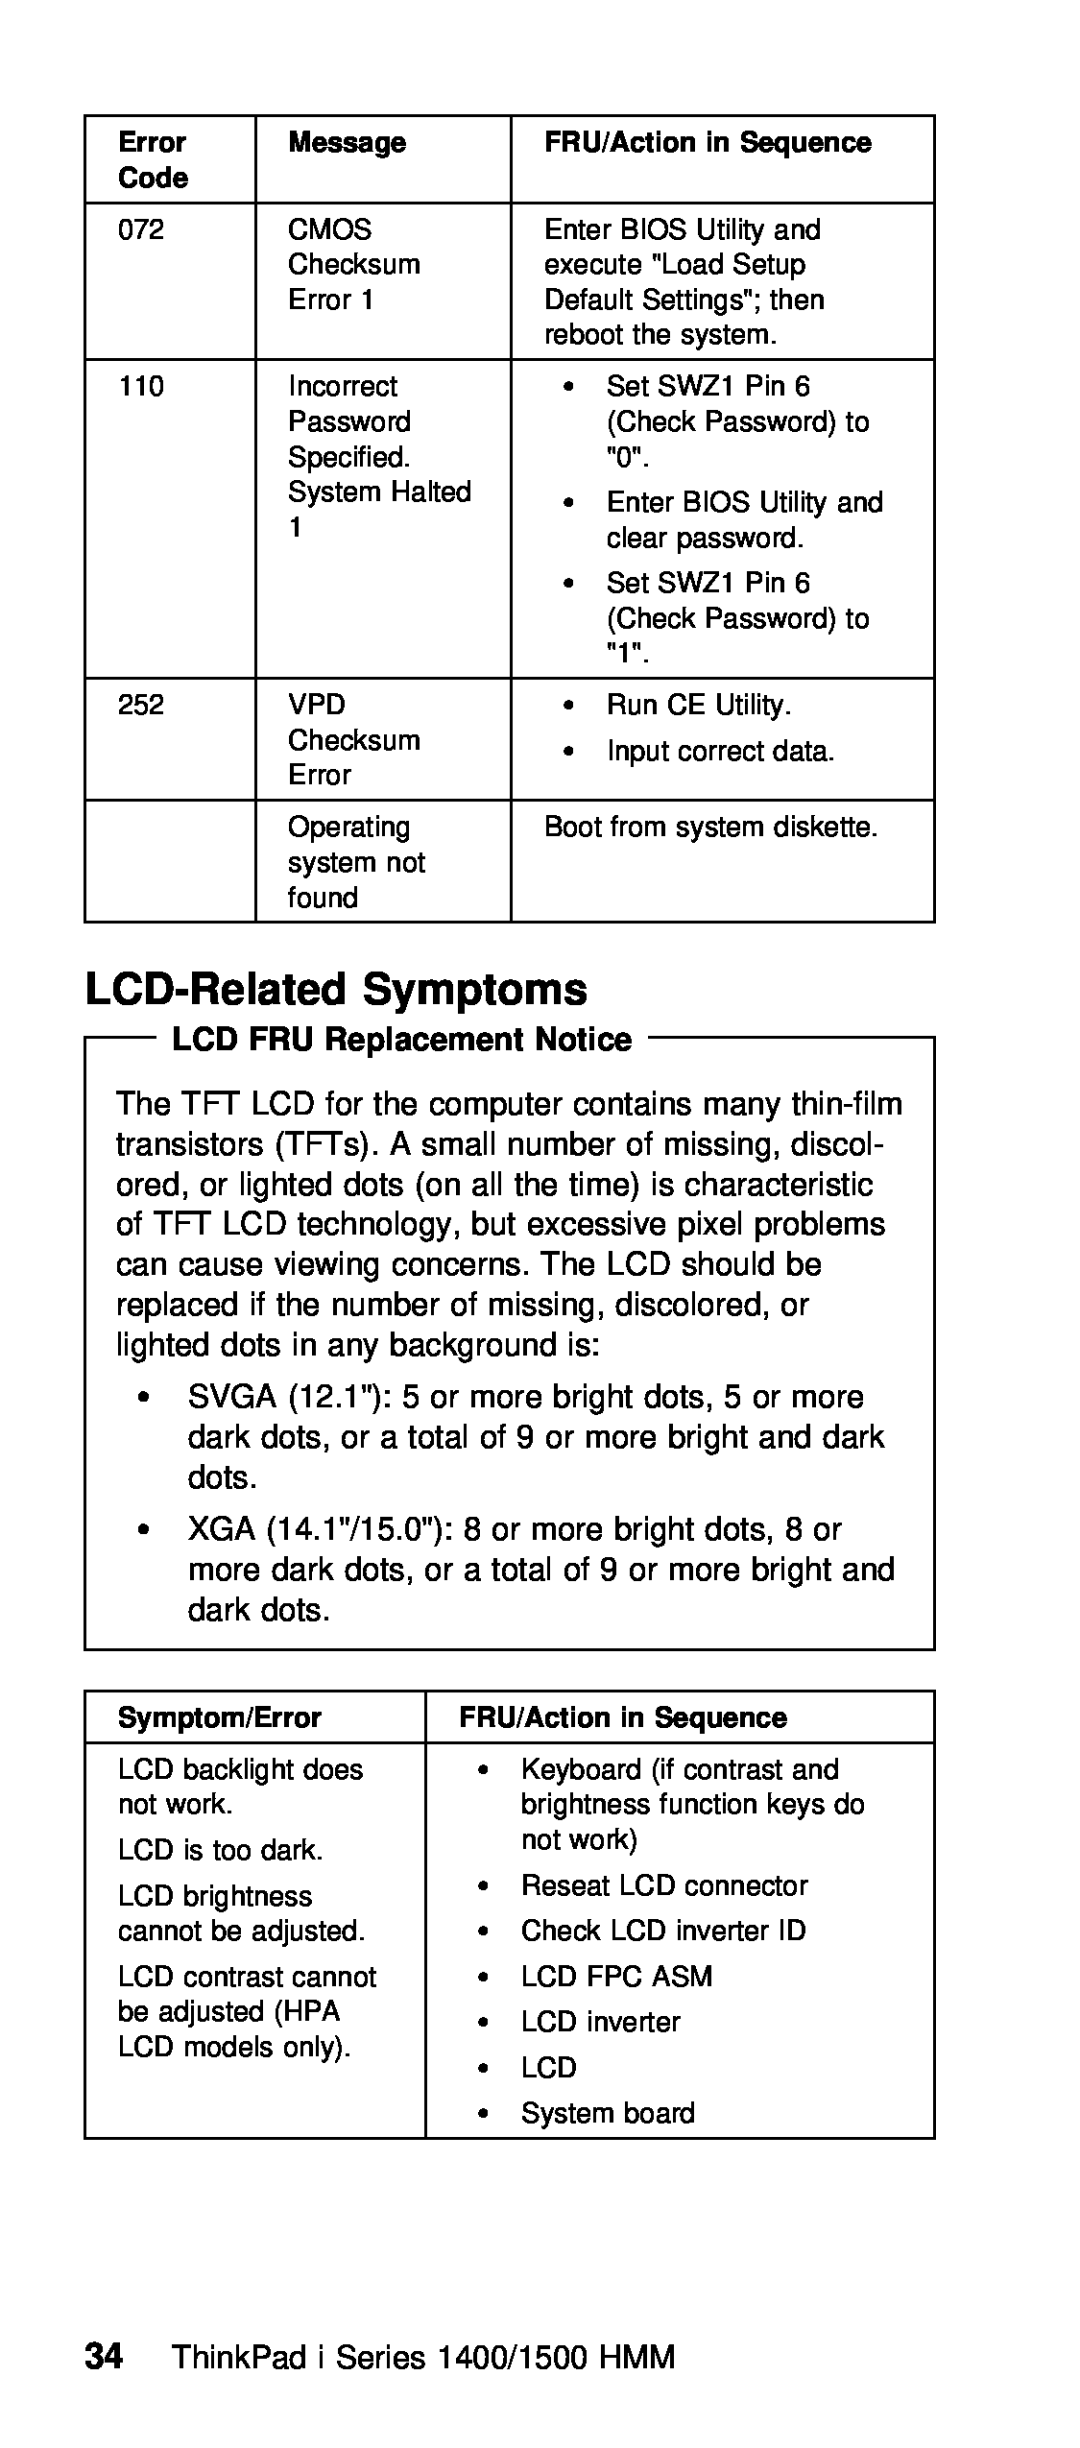 IBM Series 1500, Series 1400 manual LCD-Related Symptoms, LCD FRU Replacement Notice 